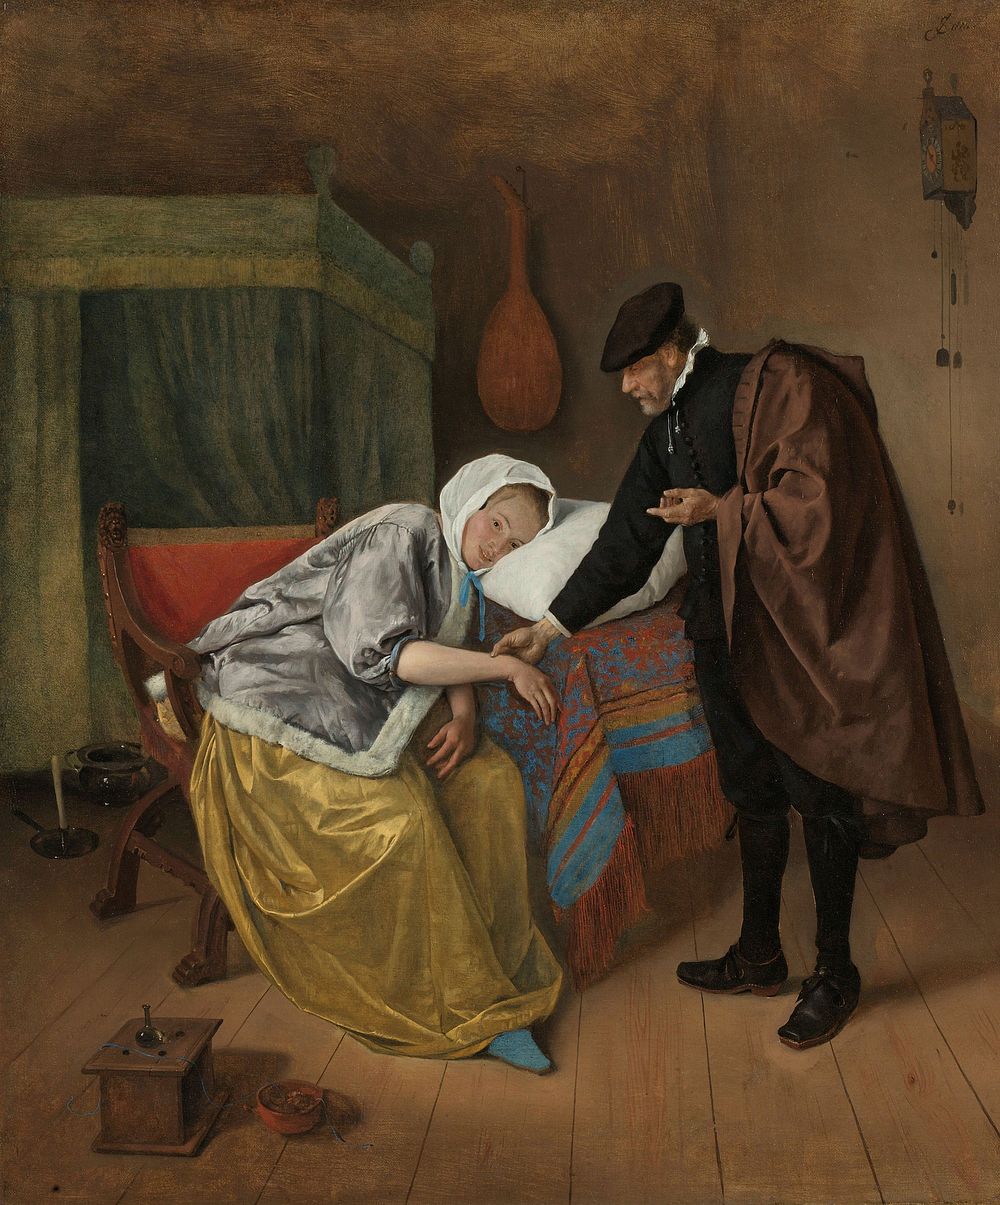 The Sick Woman (c. 1663 - c. 1666) by Jan Havicksz Steen